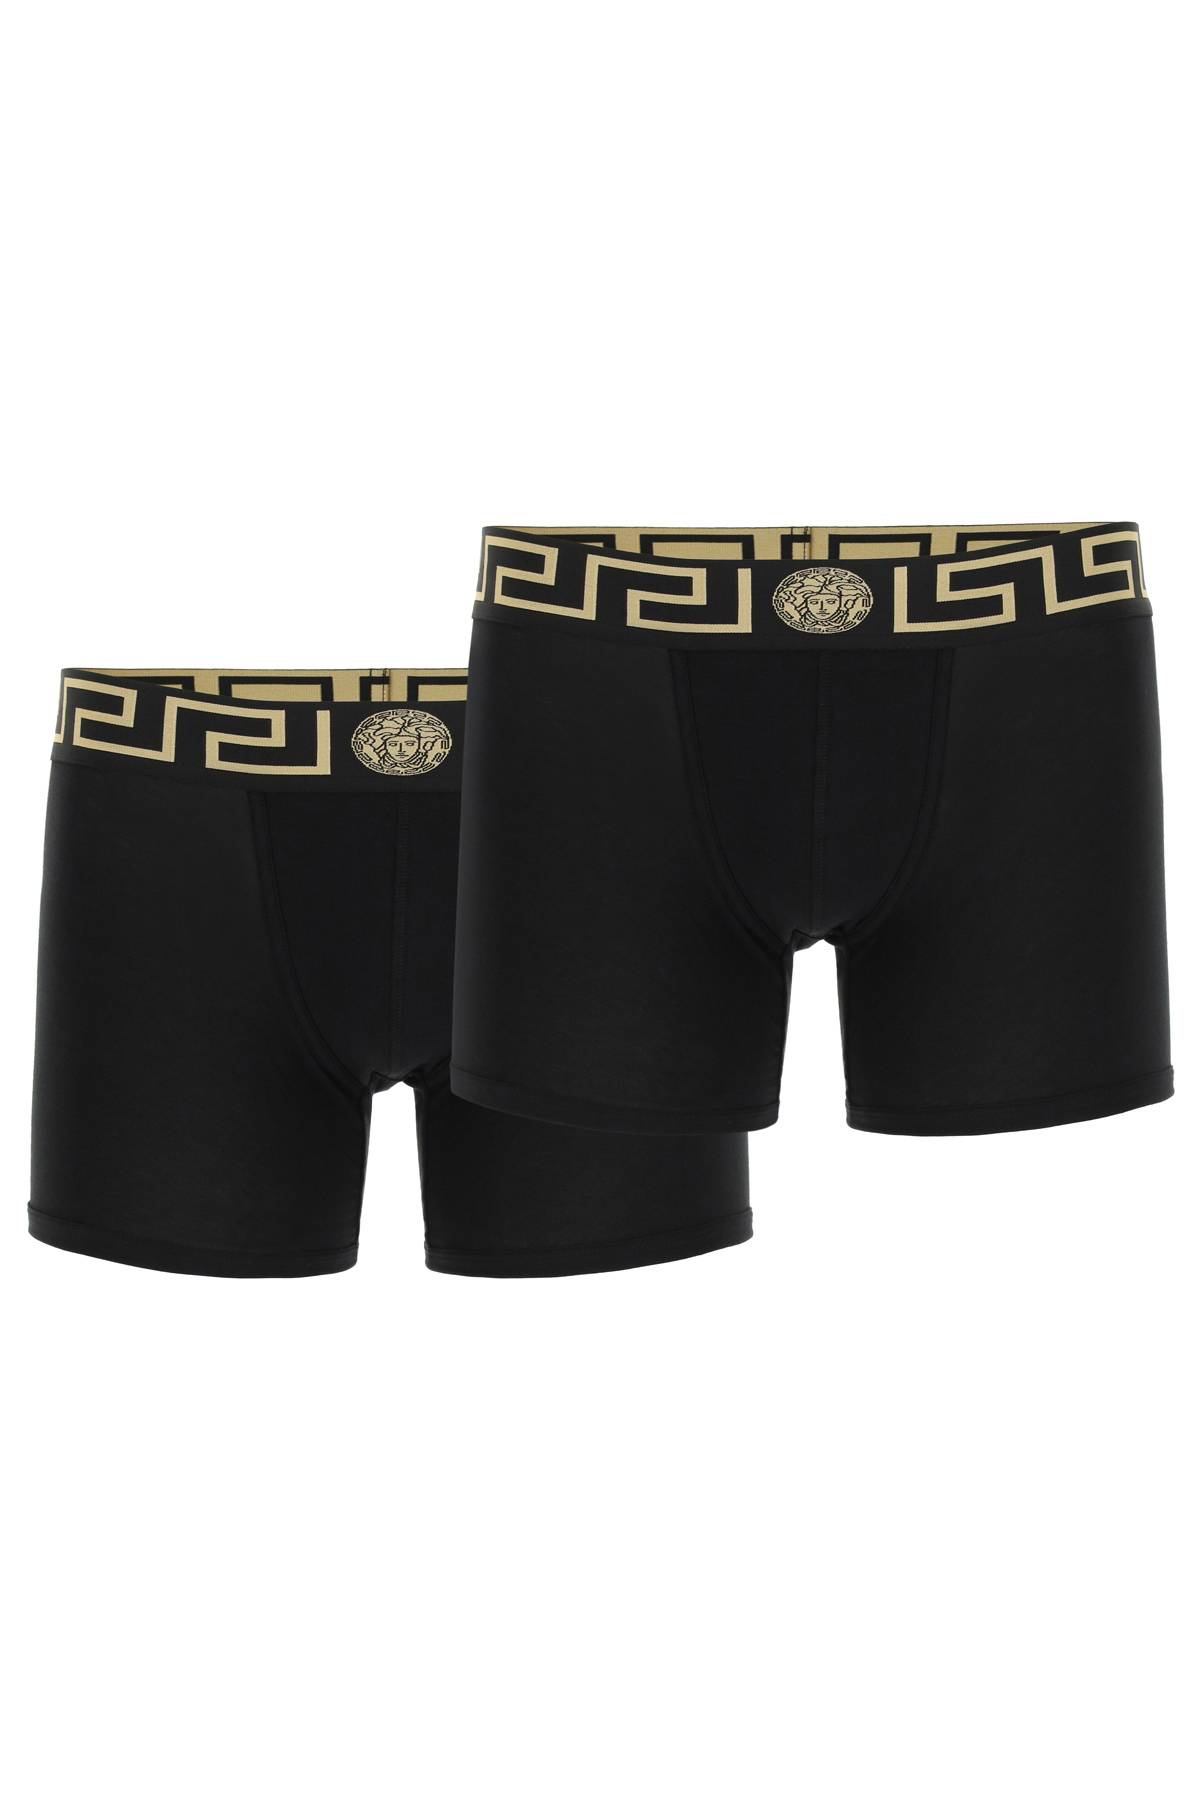 Versace VERSACE bi-pack underwear trunk with greca band